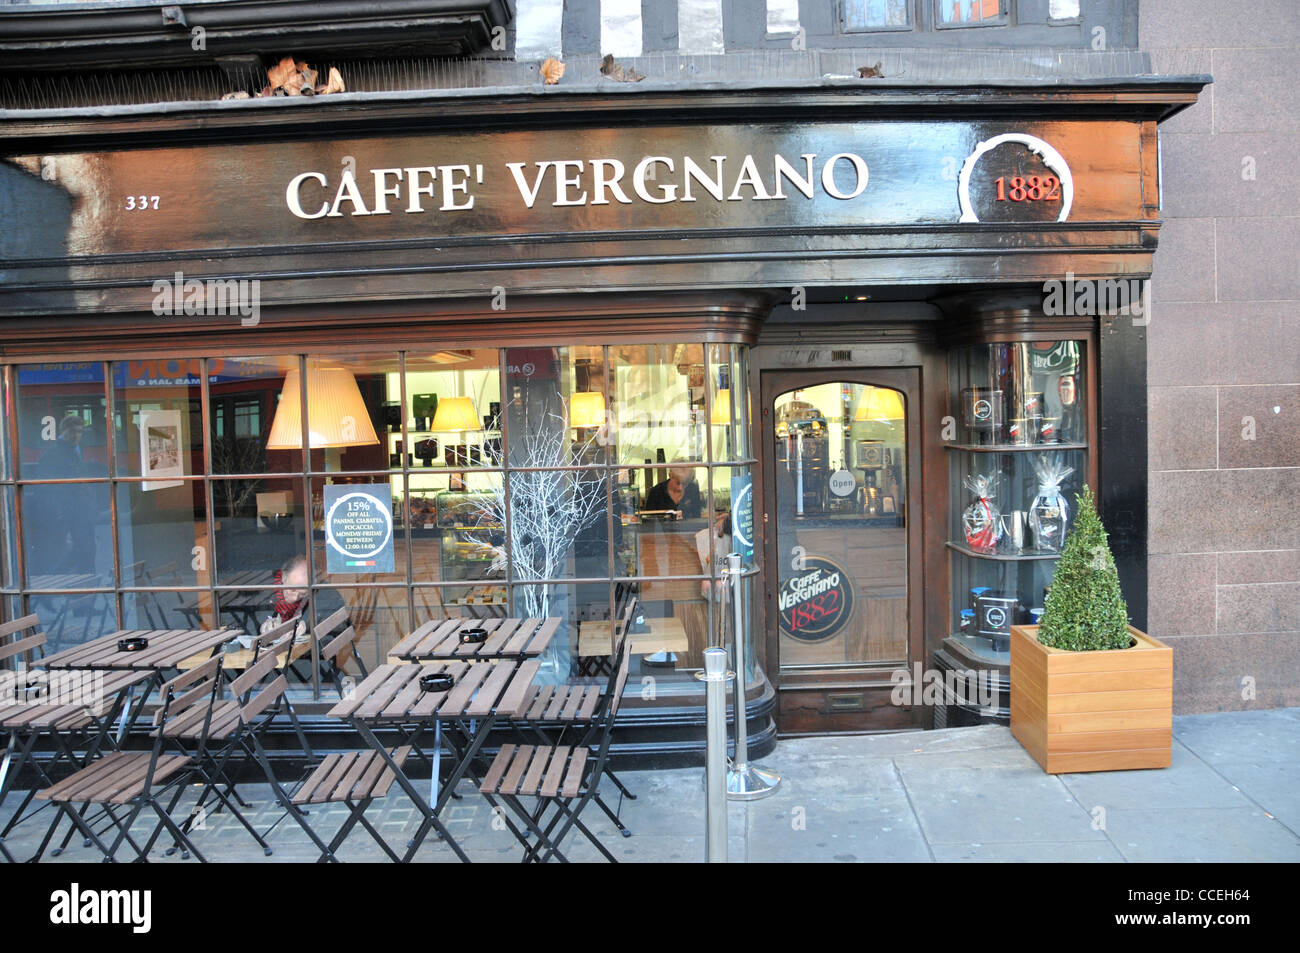 Caffe Vergnano Holborn coffee cafe Italian Espresso Stock Photo - Alamy